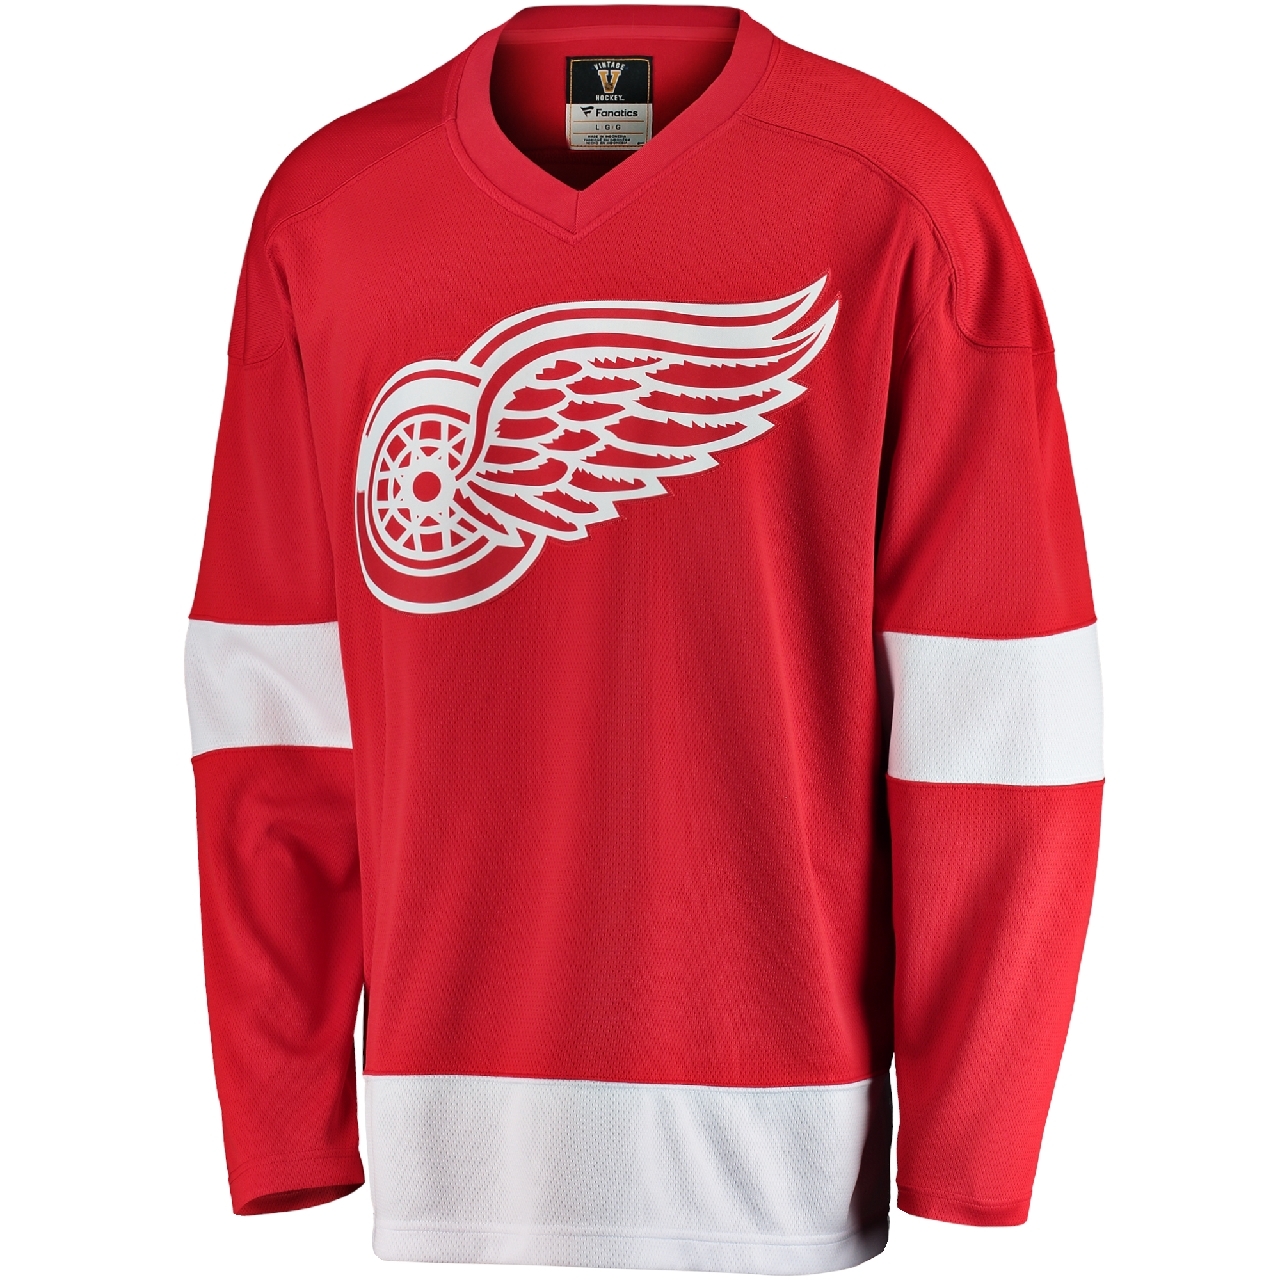 vintage detroit red wings hockey jersey made in - Depop